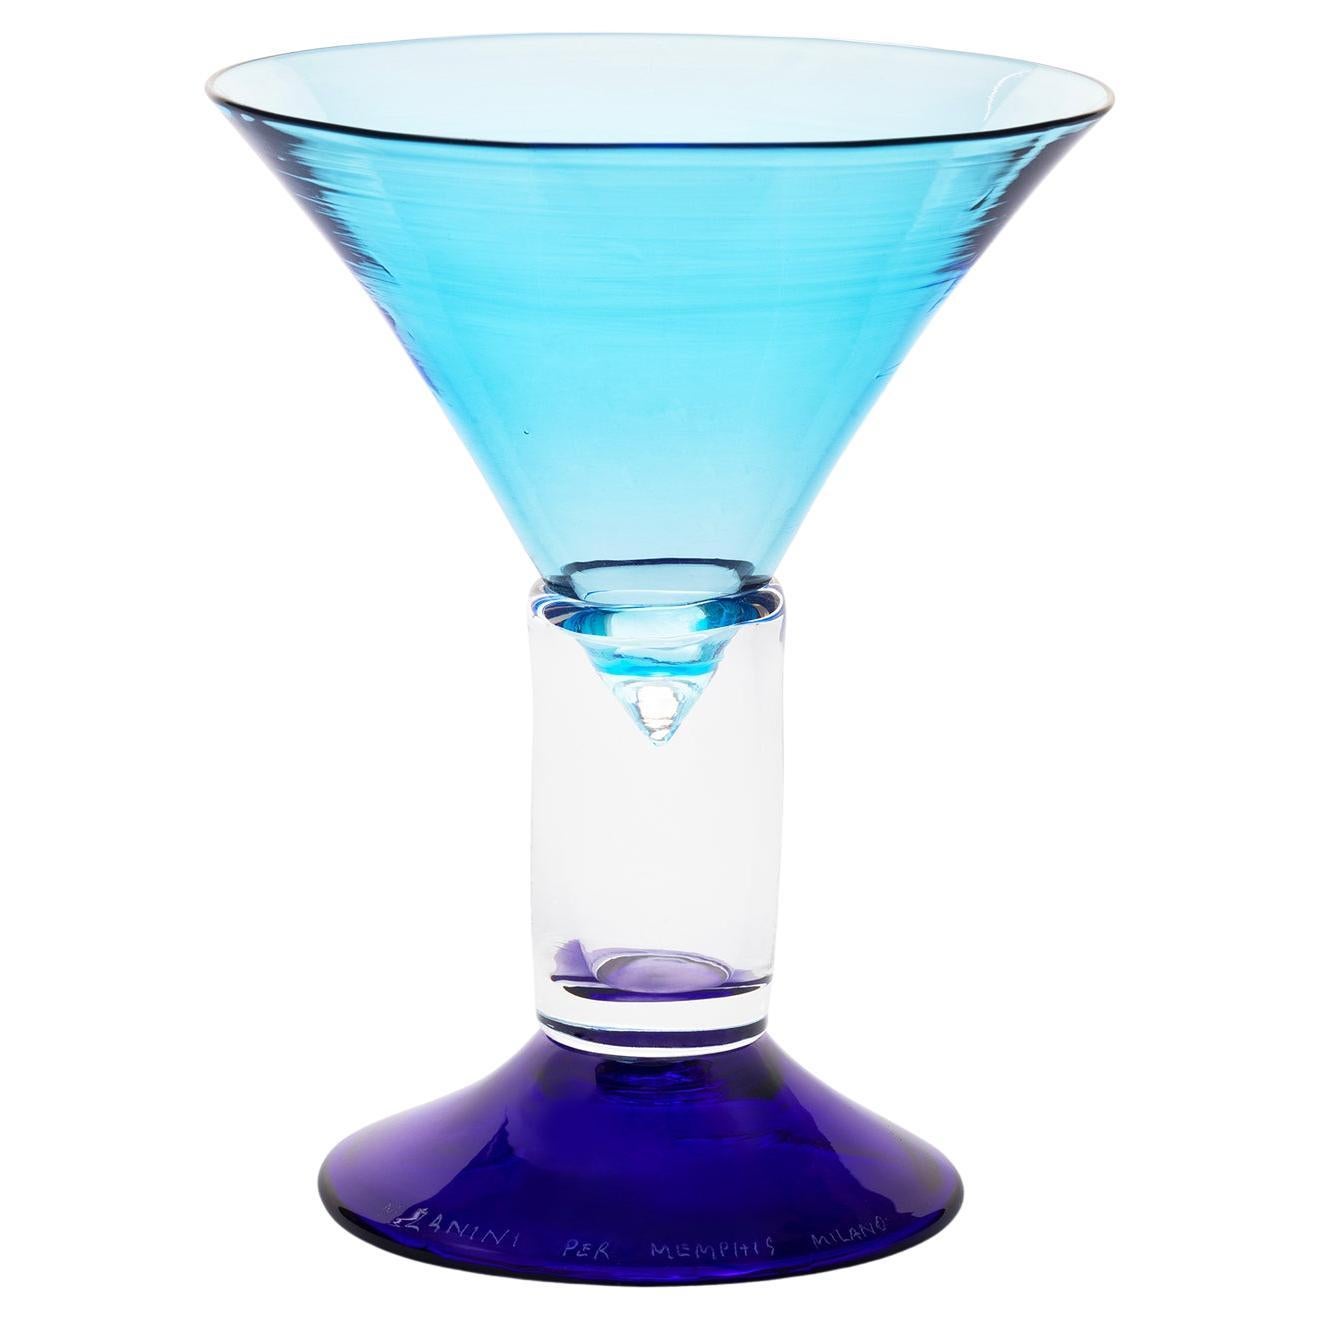 CASSIOPEA-Glas in Klar und Blau von Marco Zanini für Memphis Milano-Kollektion